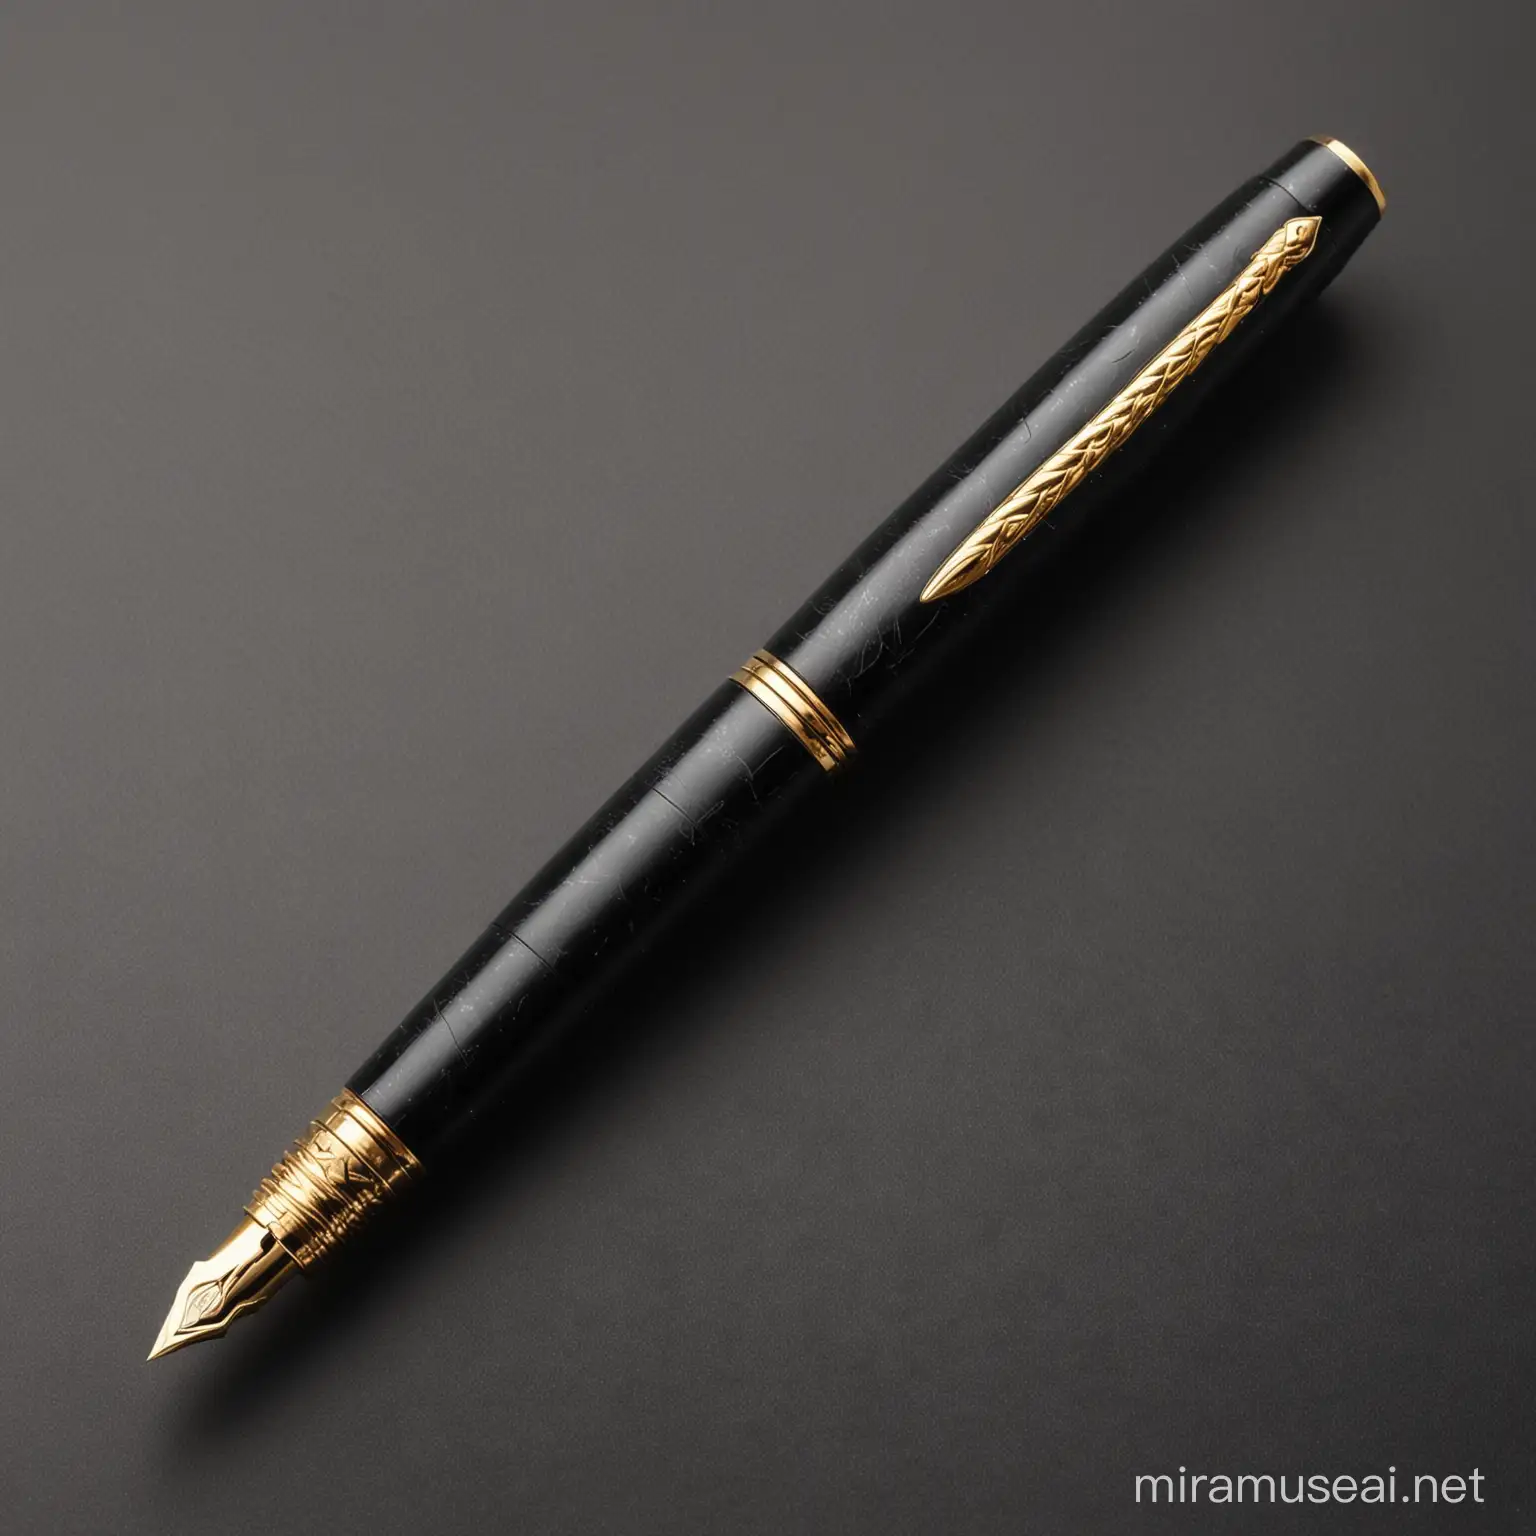 Elegant Black Adam Style Fountain Pen Luxury Writing Instrument for Discerning Professionals